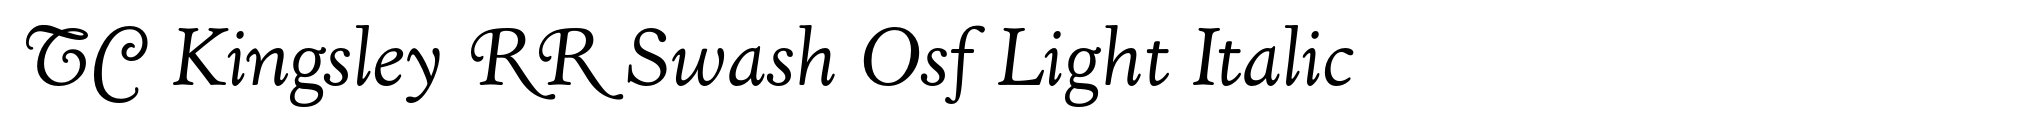 TC Kingsley RR Swash Osf Light Italic image